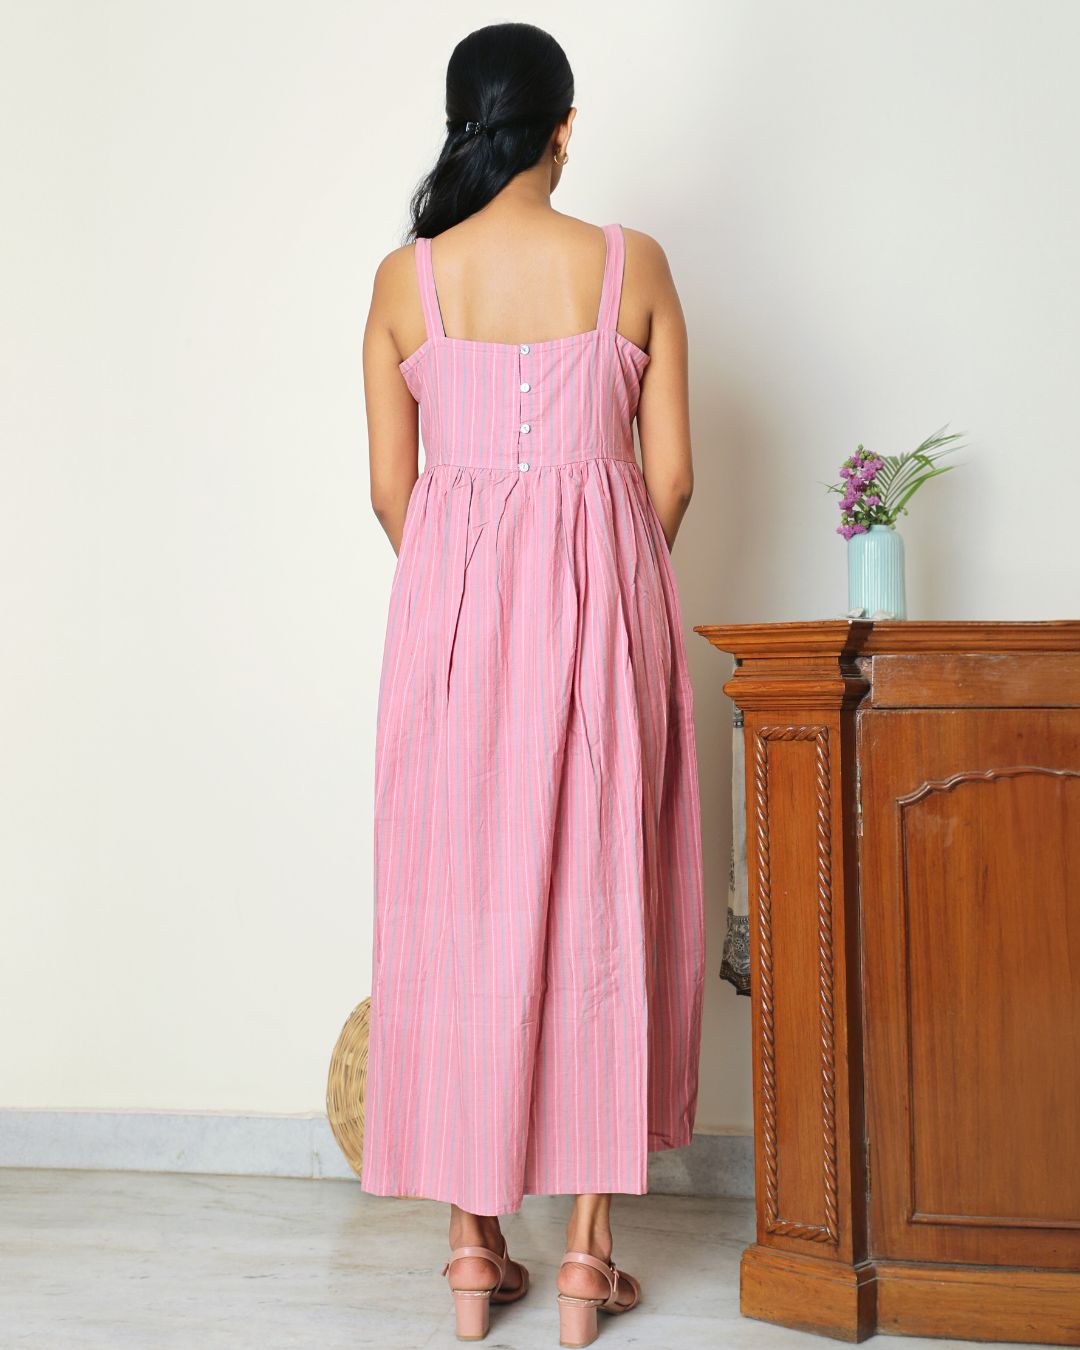 Shop maxi pink dress from Bebaak: Handmade clothing